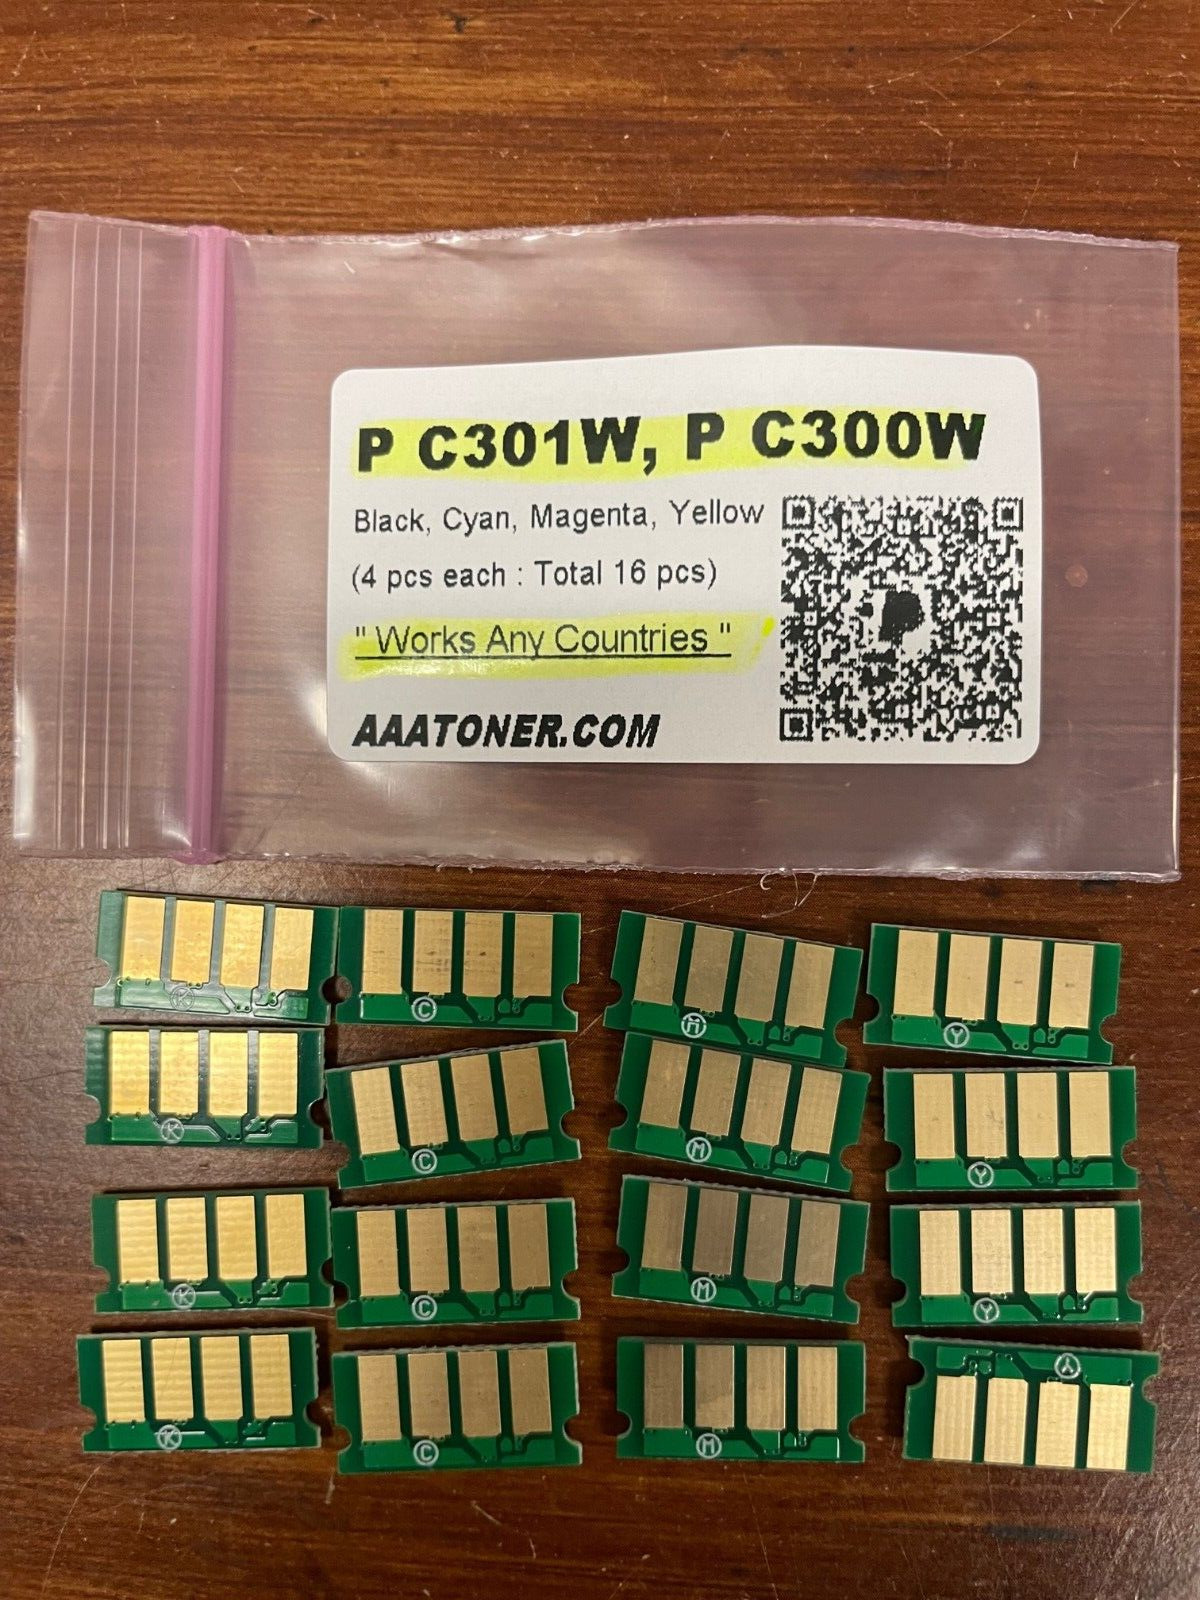 16 pcs Toner Chips for Ricoh PC301, P C301W, P C300W Color Laser Printer Refill